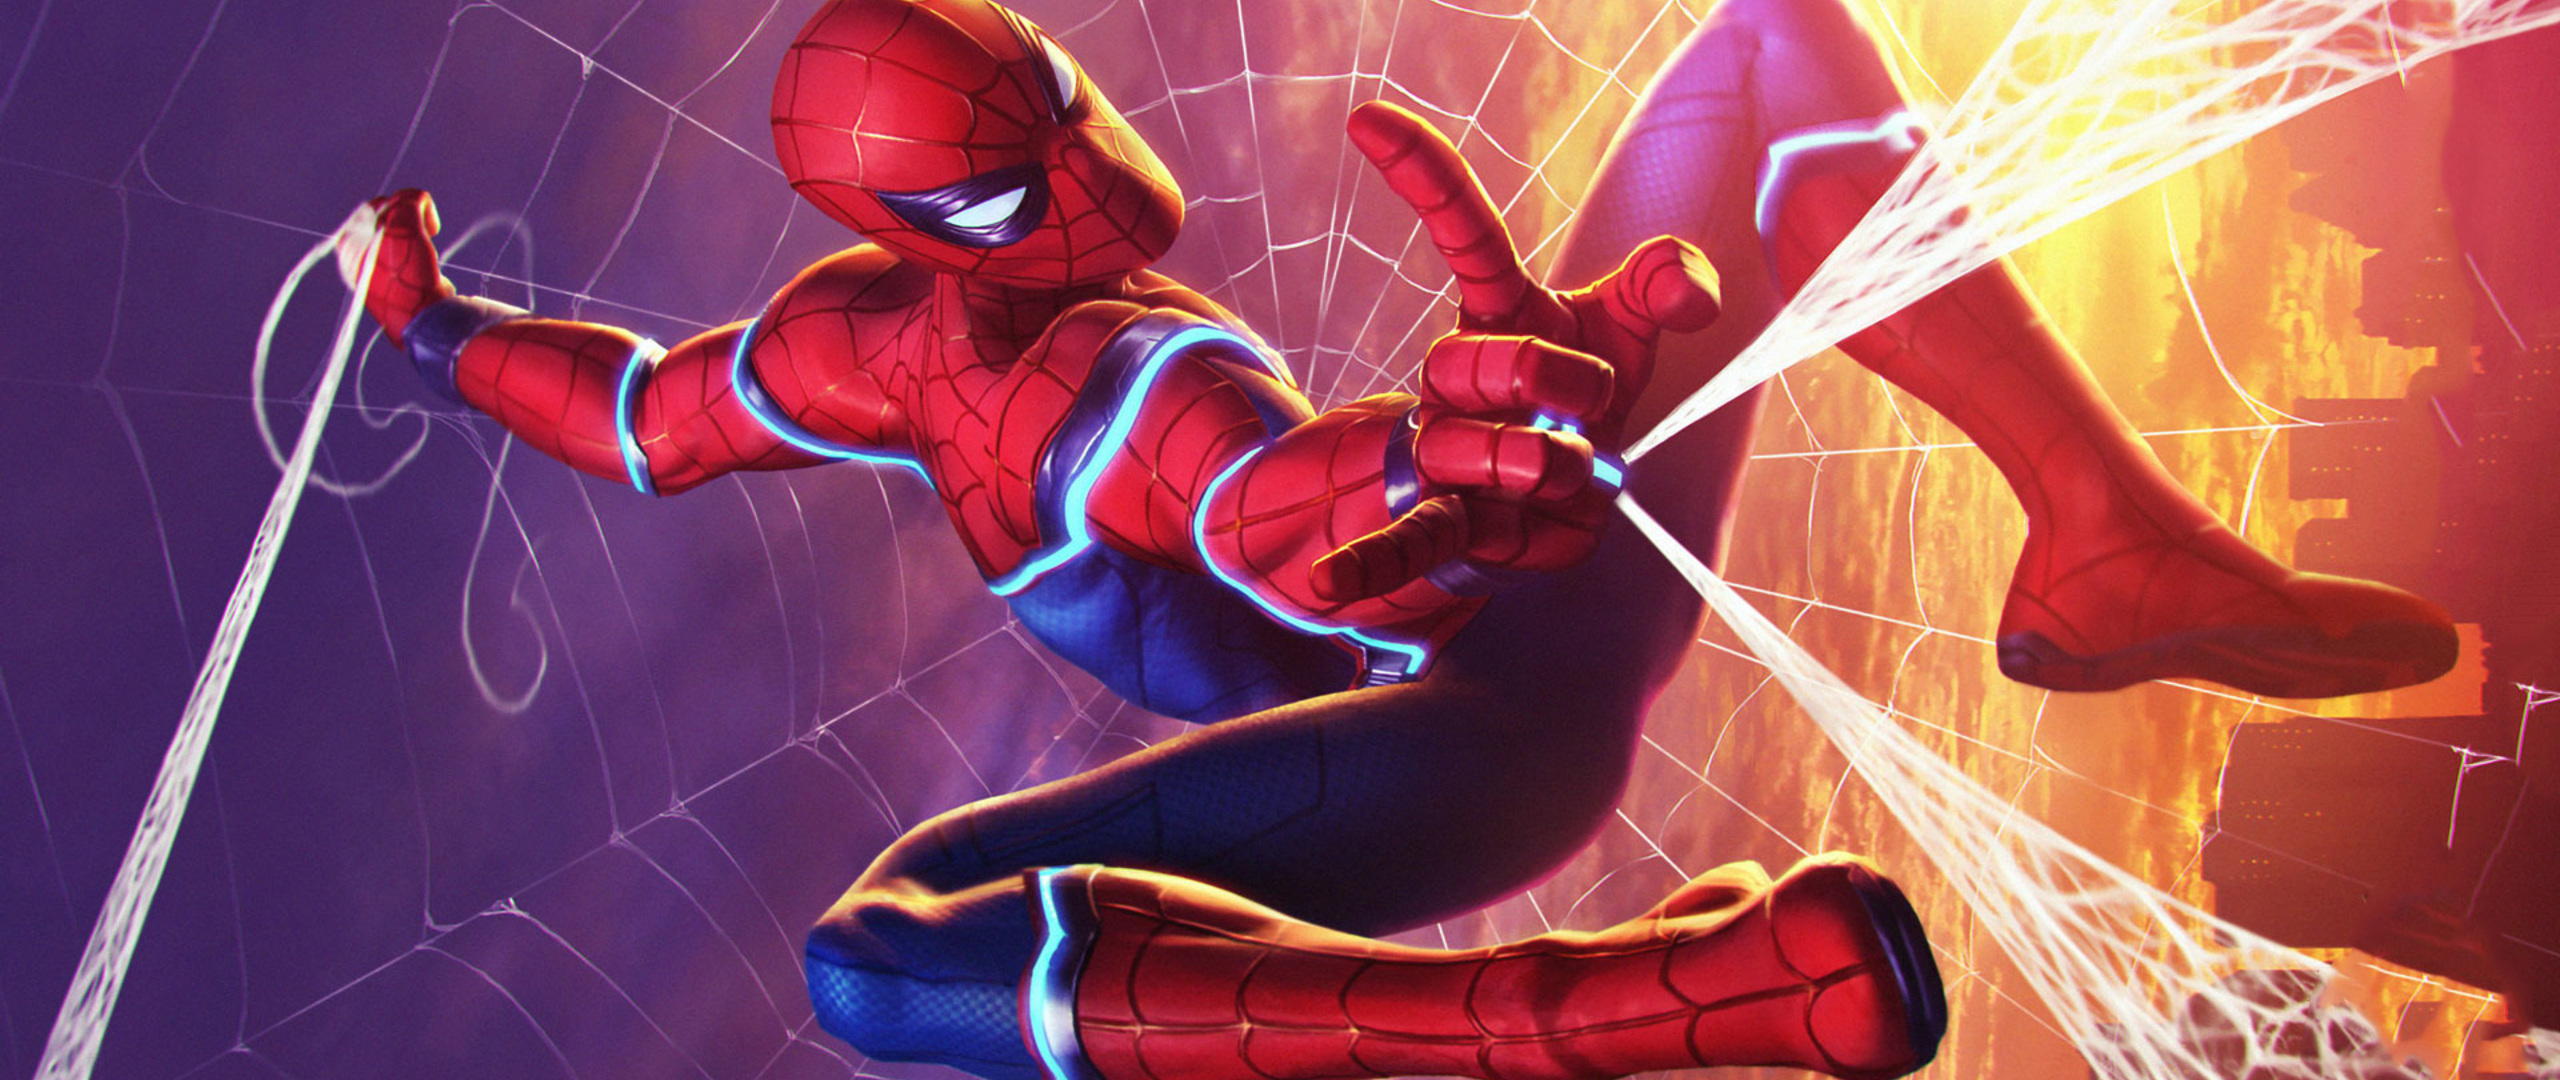 spiderman-marvel-contest-of-champions-mv-2560x1080.jpg